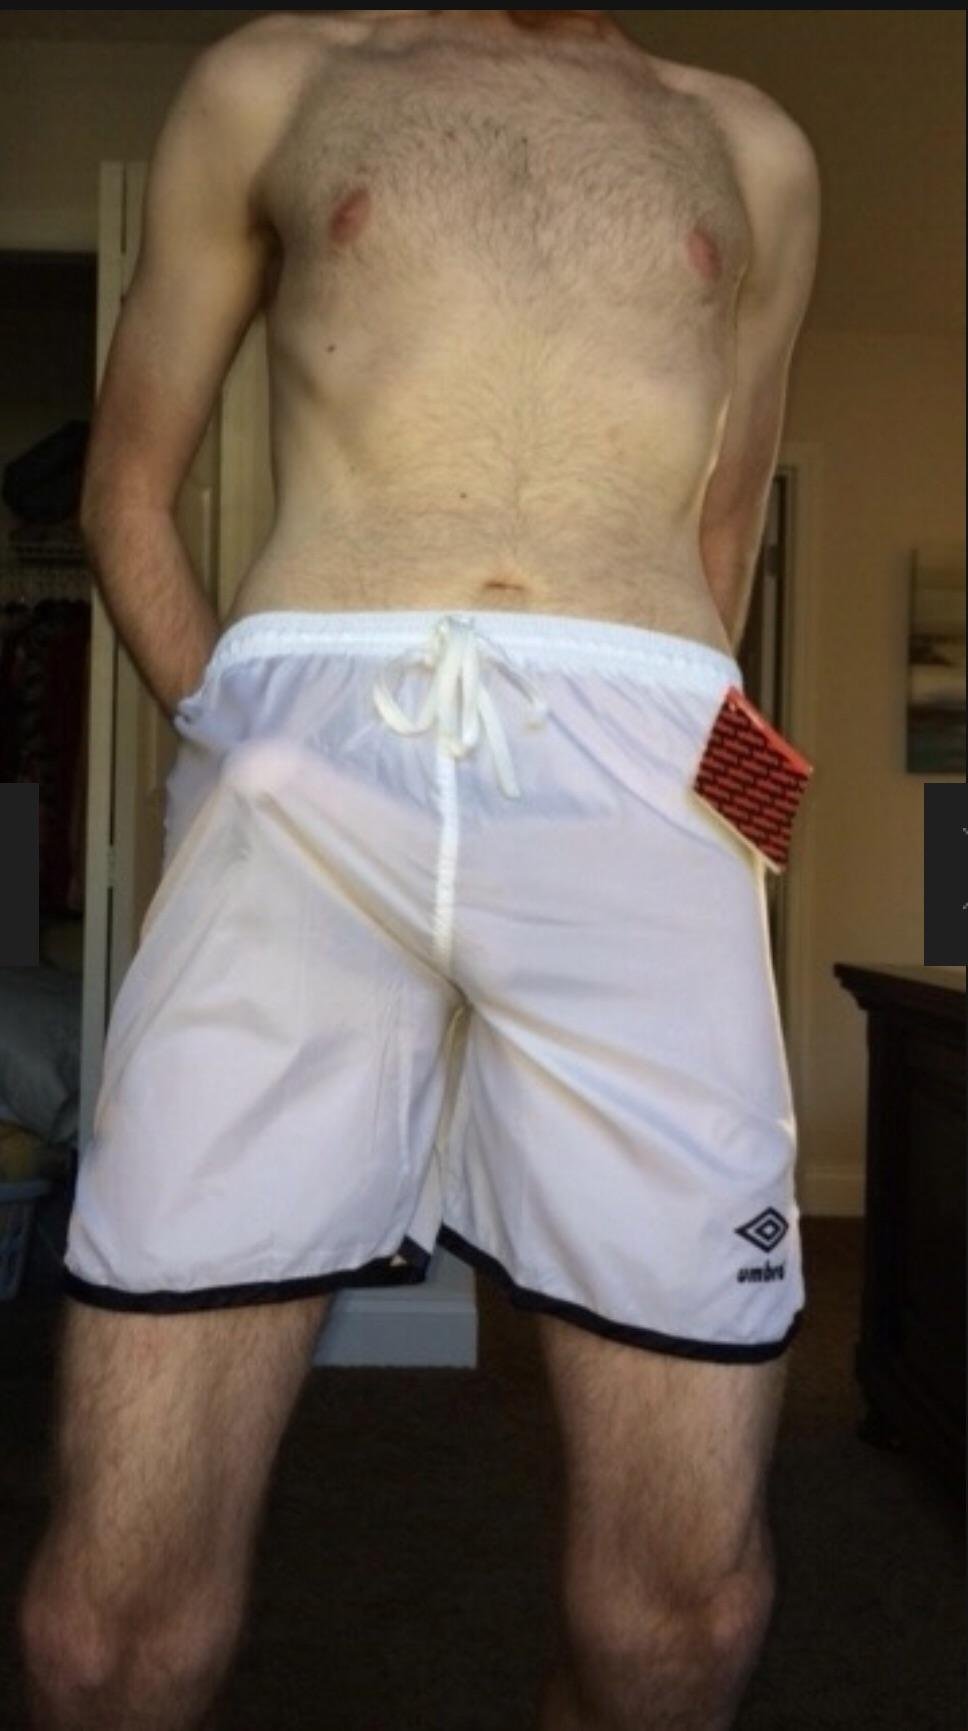 Anyone else like goin commando in see thru soccer shorts?